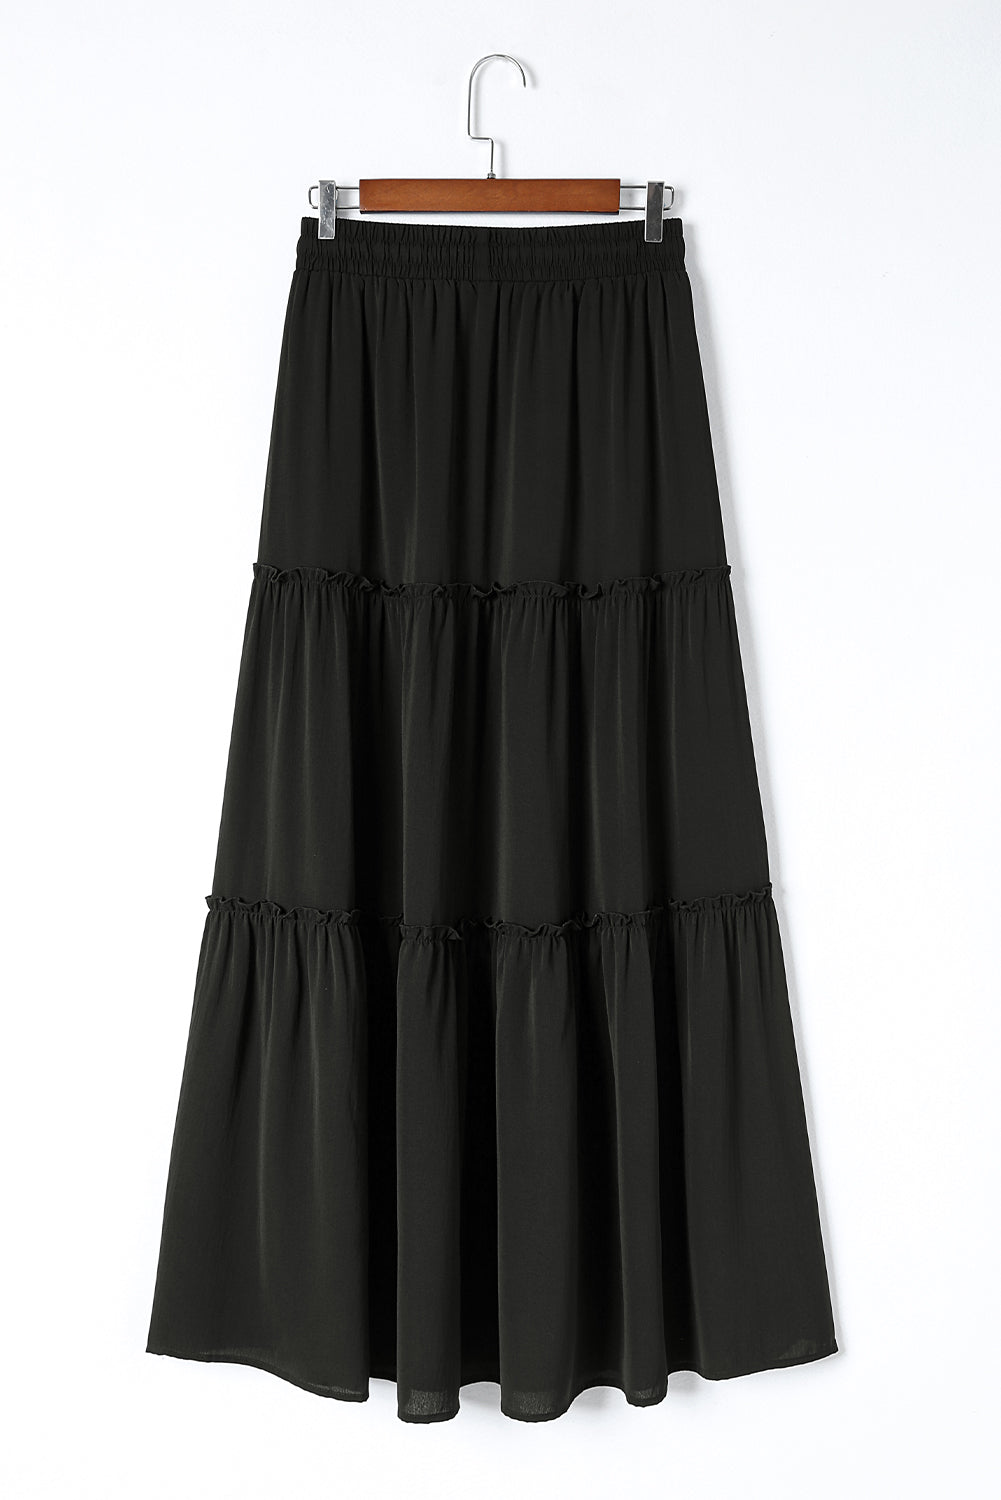 Black Frill Tiered Drawstring Waist Maxi Skirt - SELFTRITSS